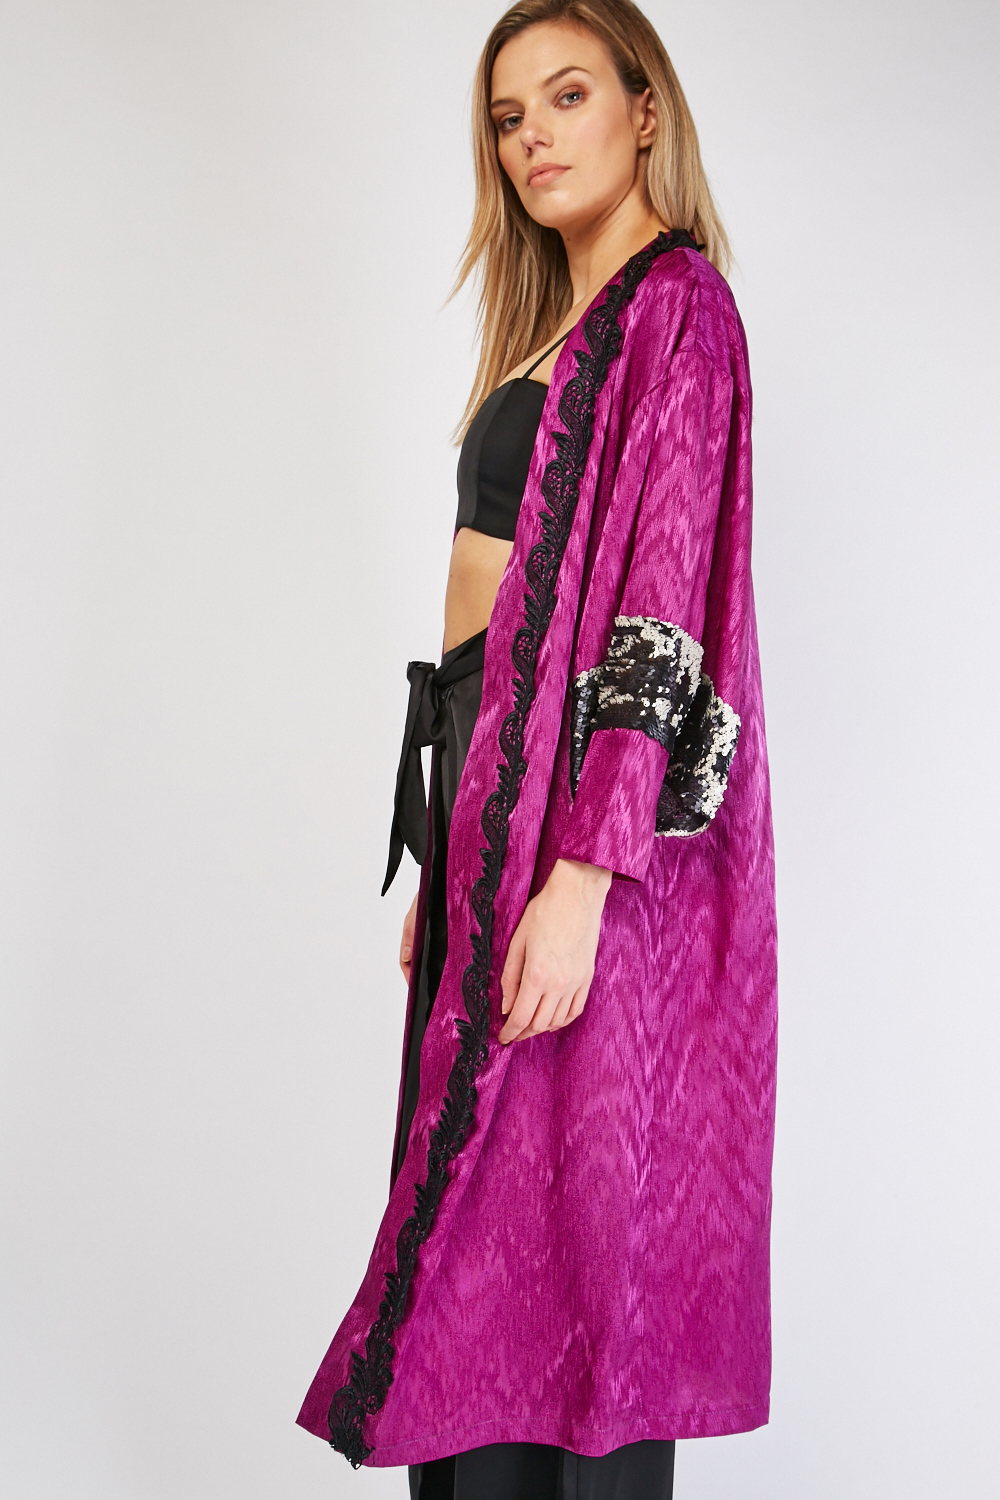 Sequin Sleeve Panel Long Line Kimono - Just $6